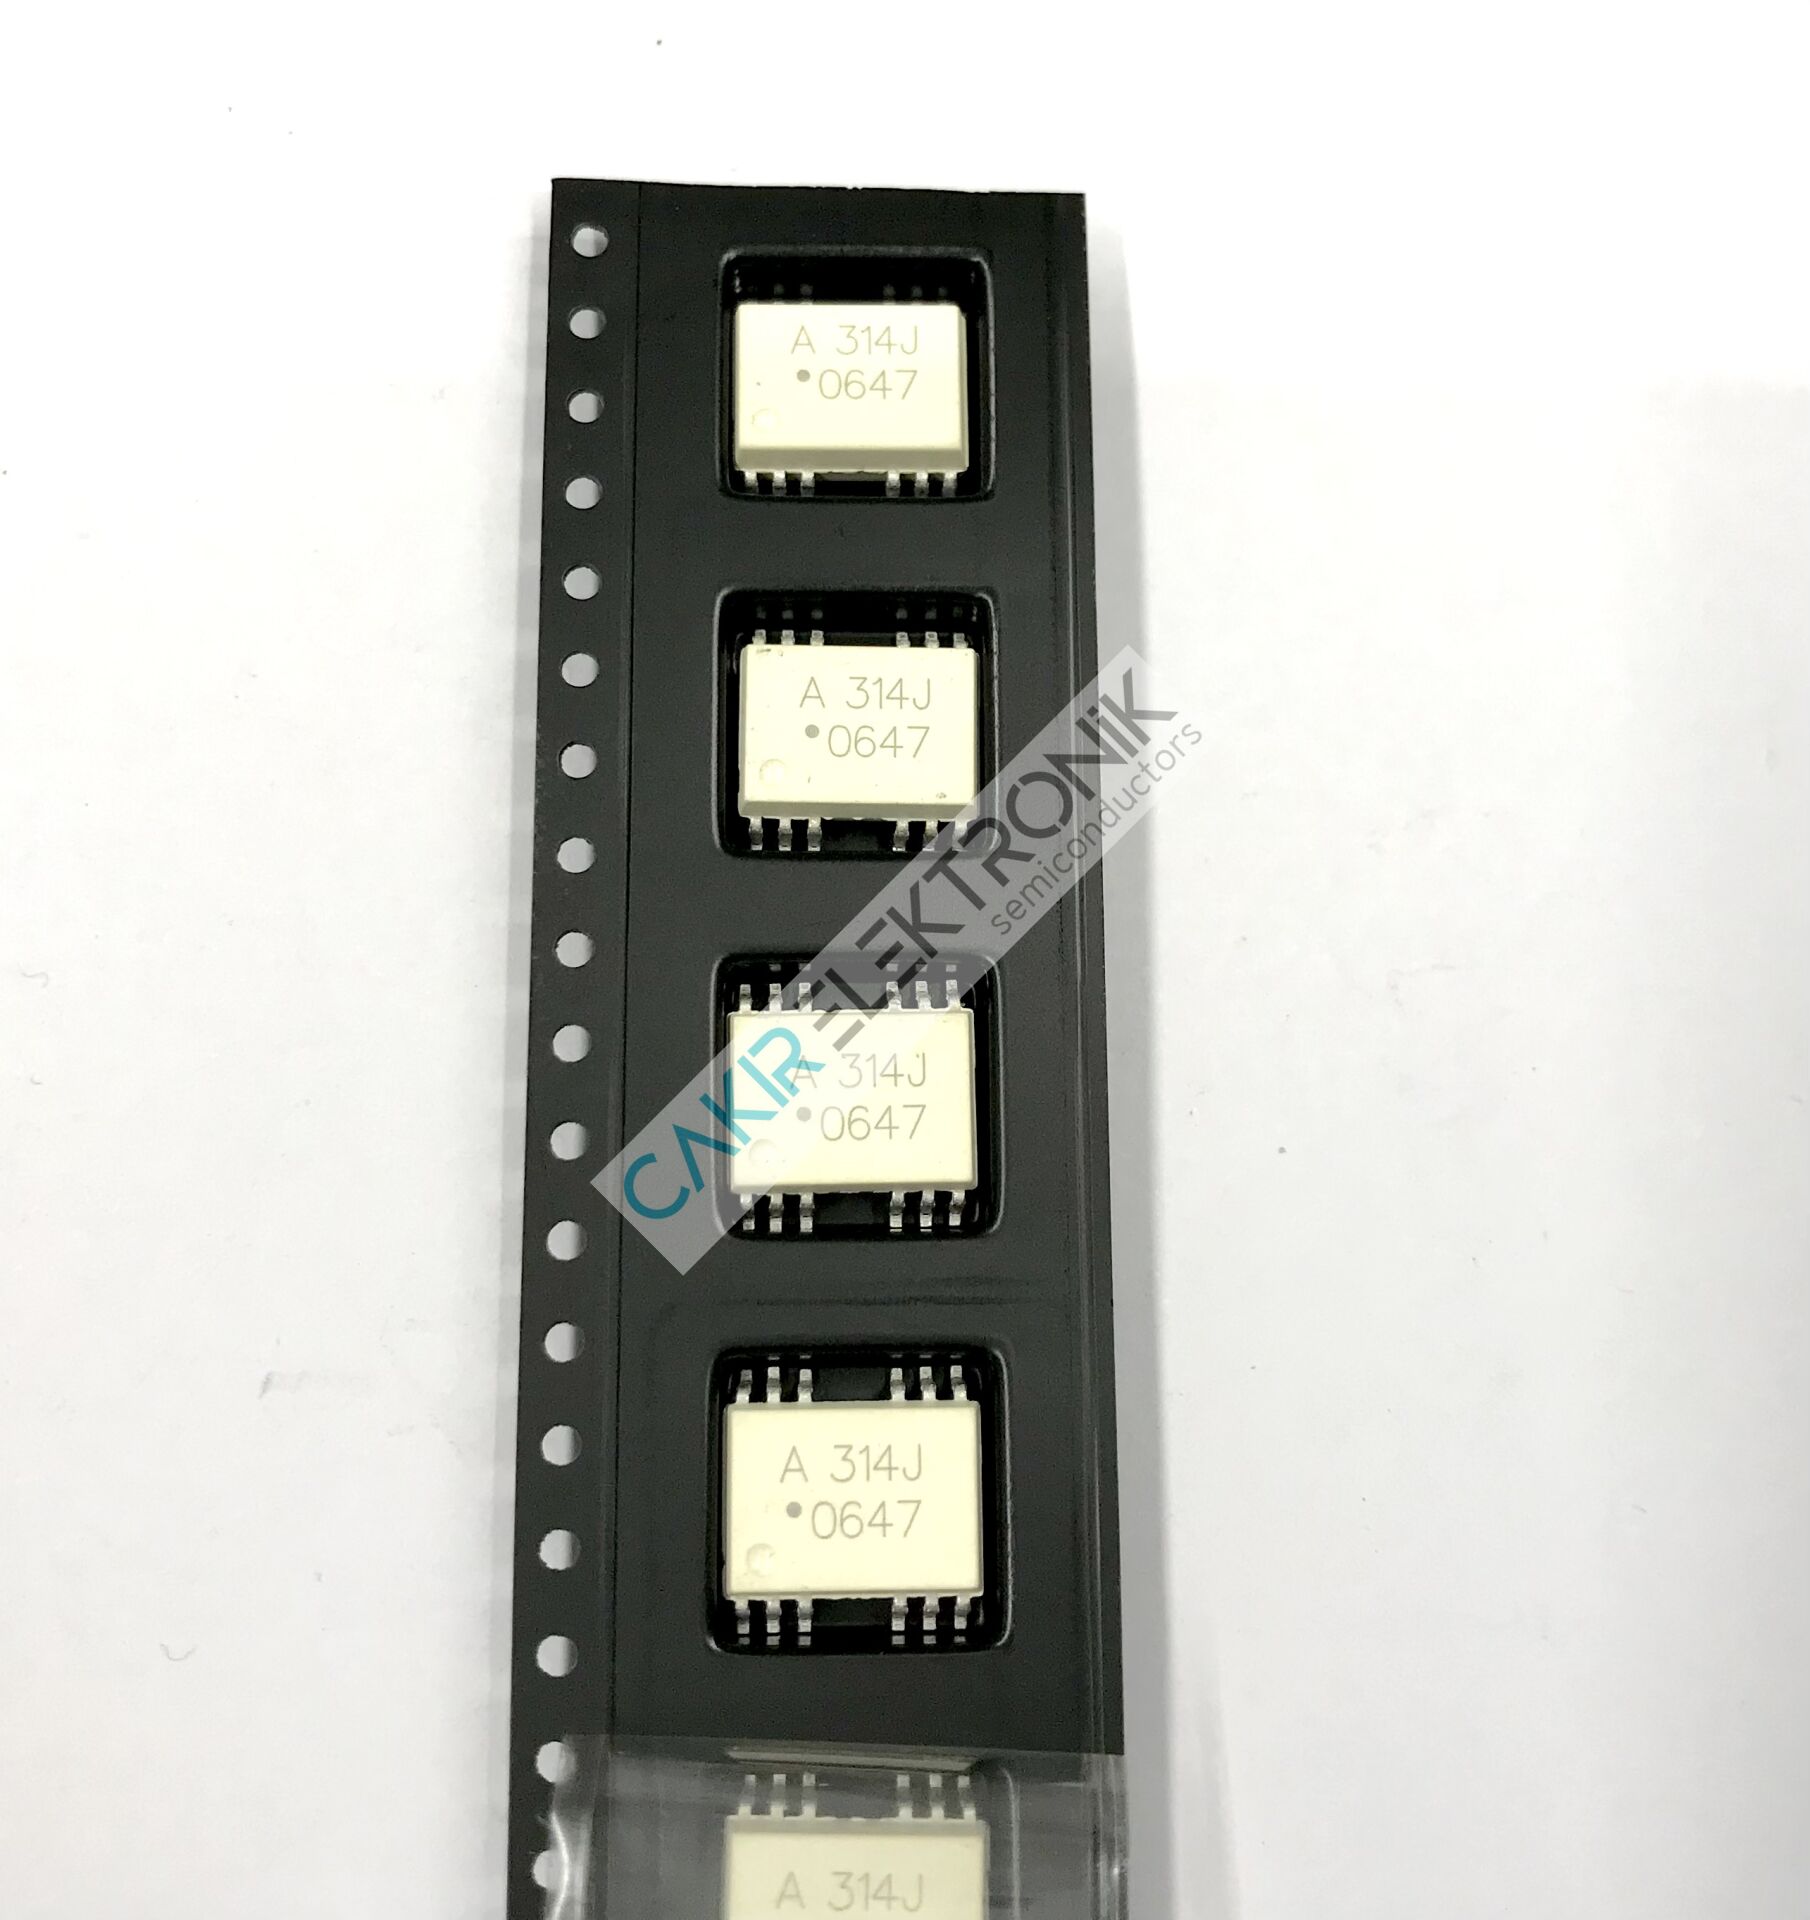 HCPL314J - A314J - HCPL-314J-000 - 0.4 Amp Output Current IGBT Gate Drive Optocoupler